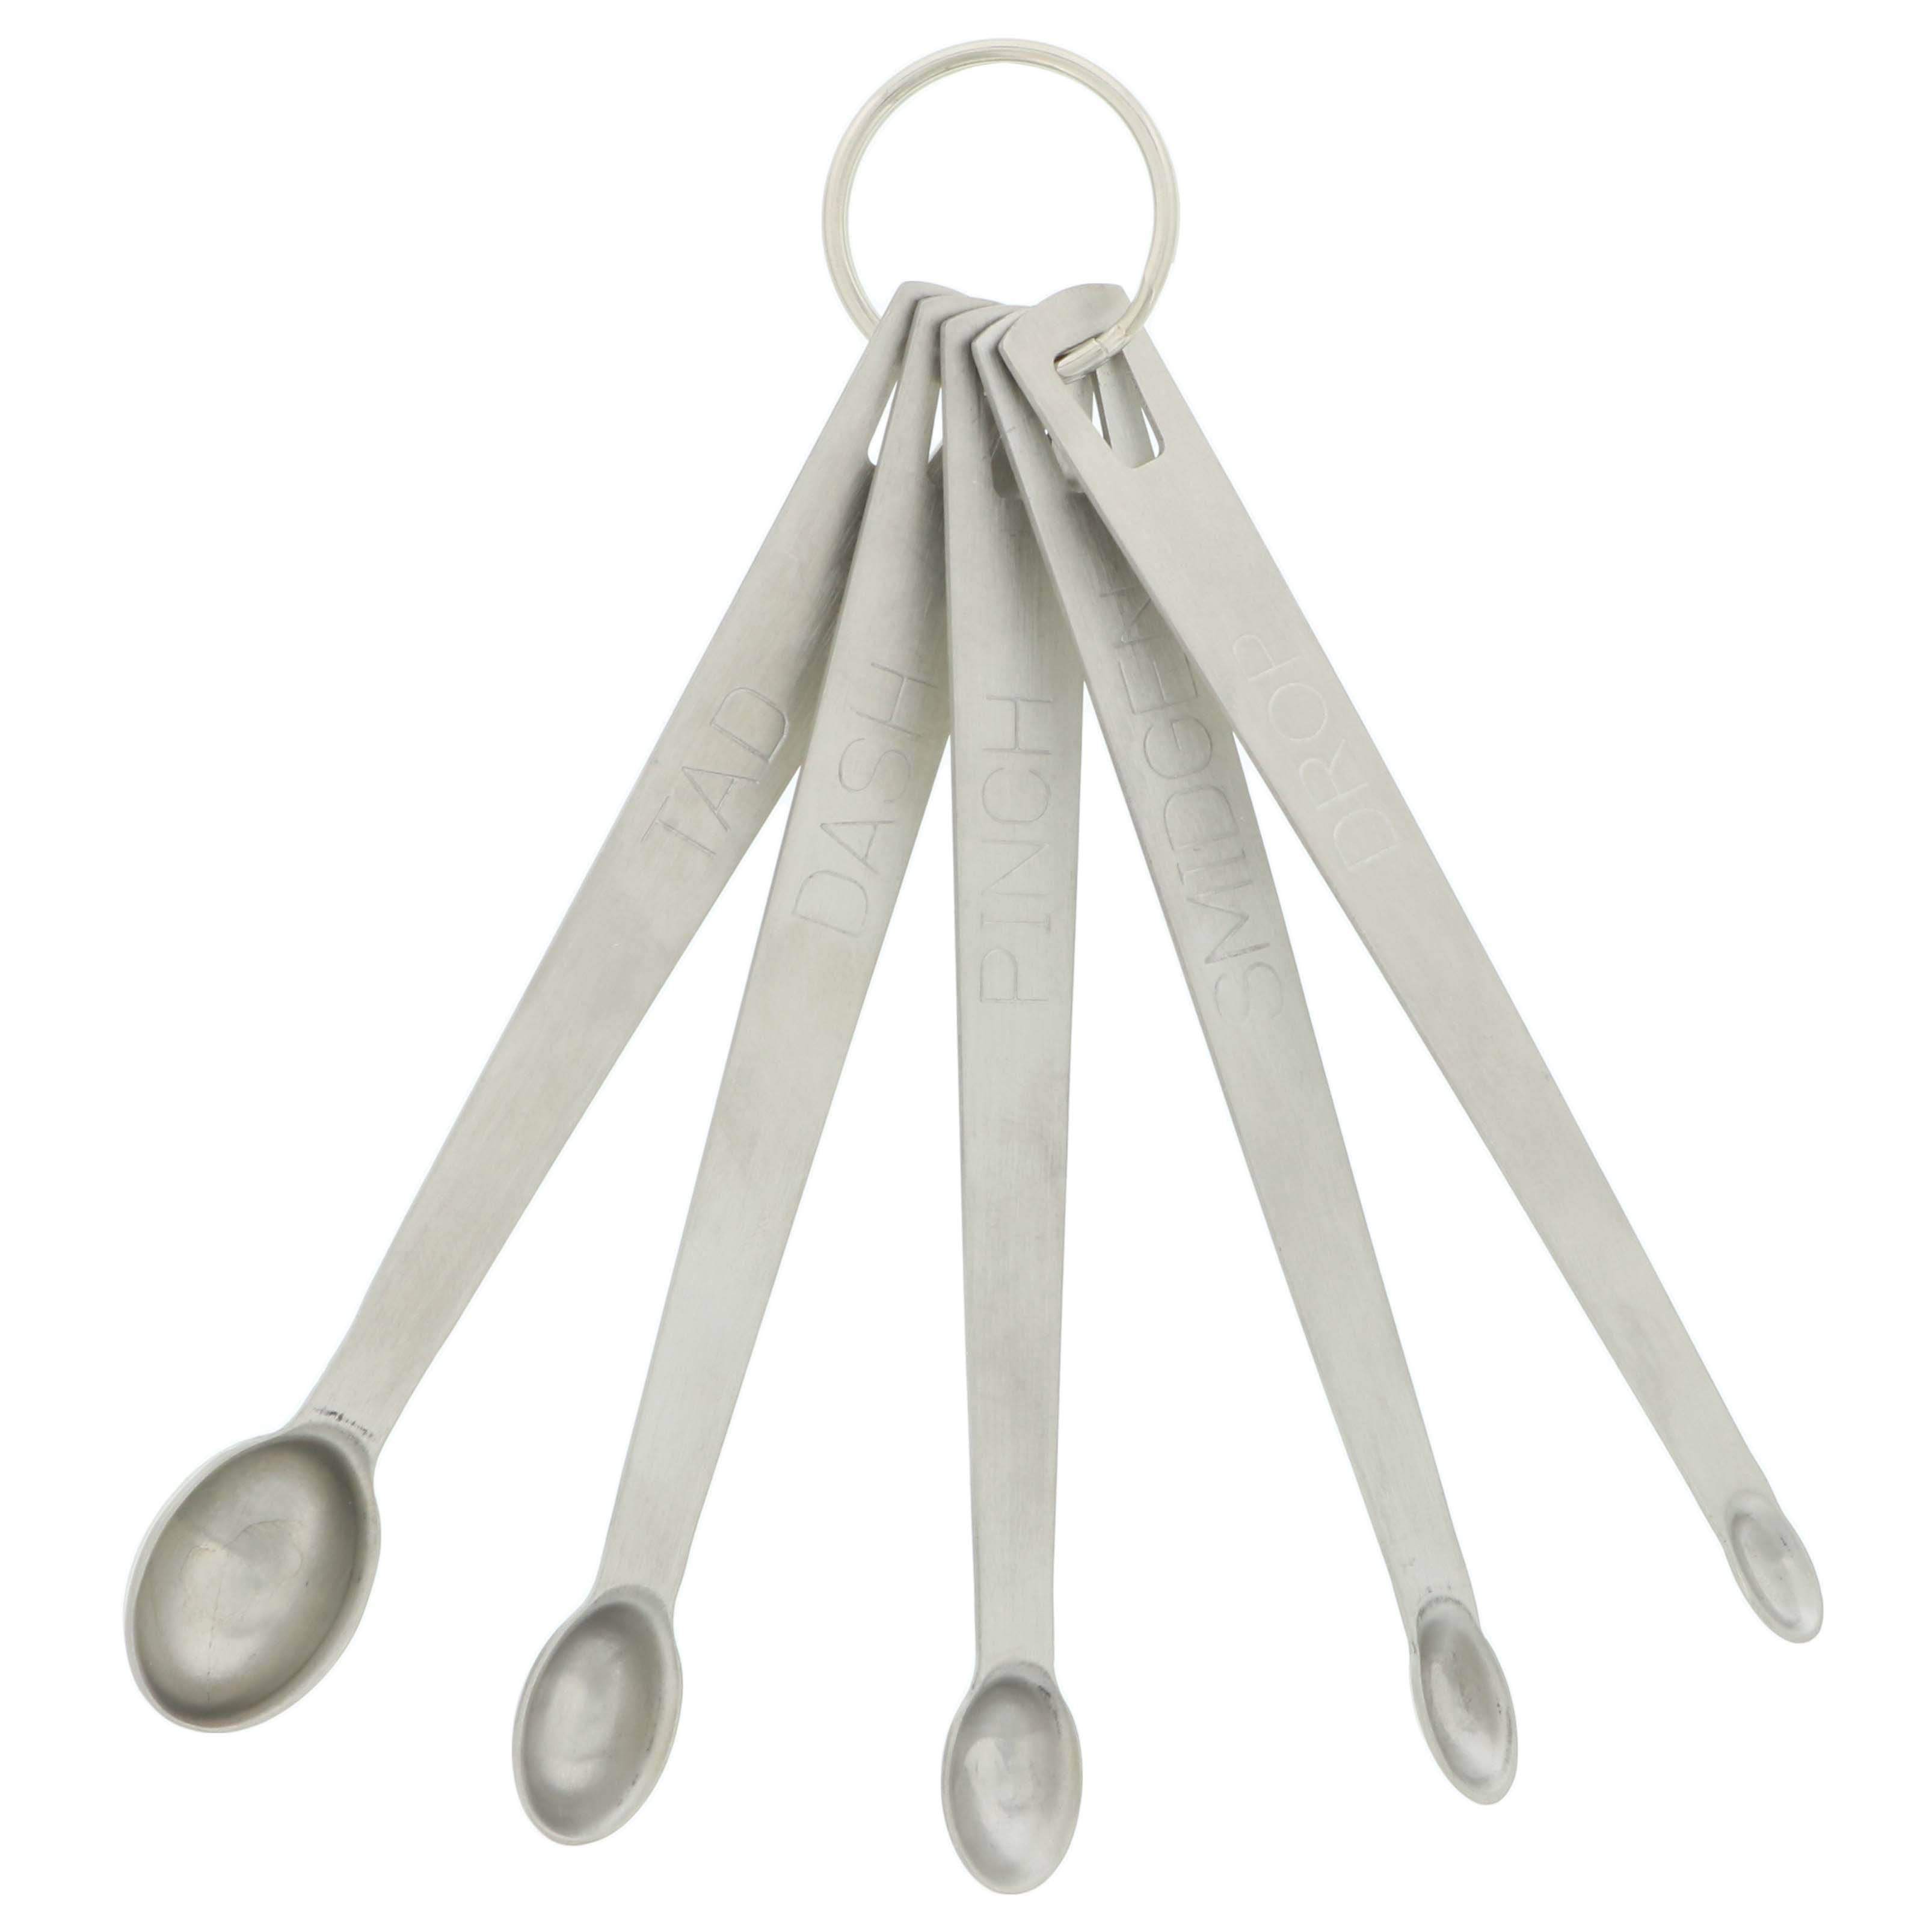 Norpro Mini Measuring Spoon Set